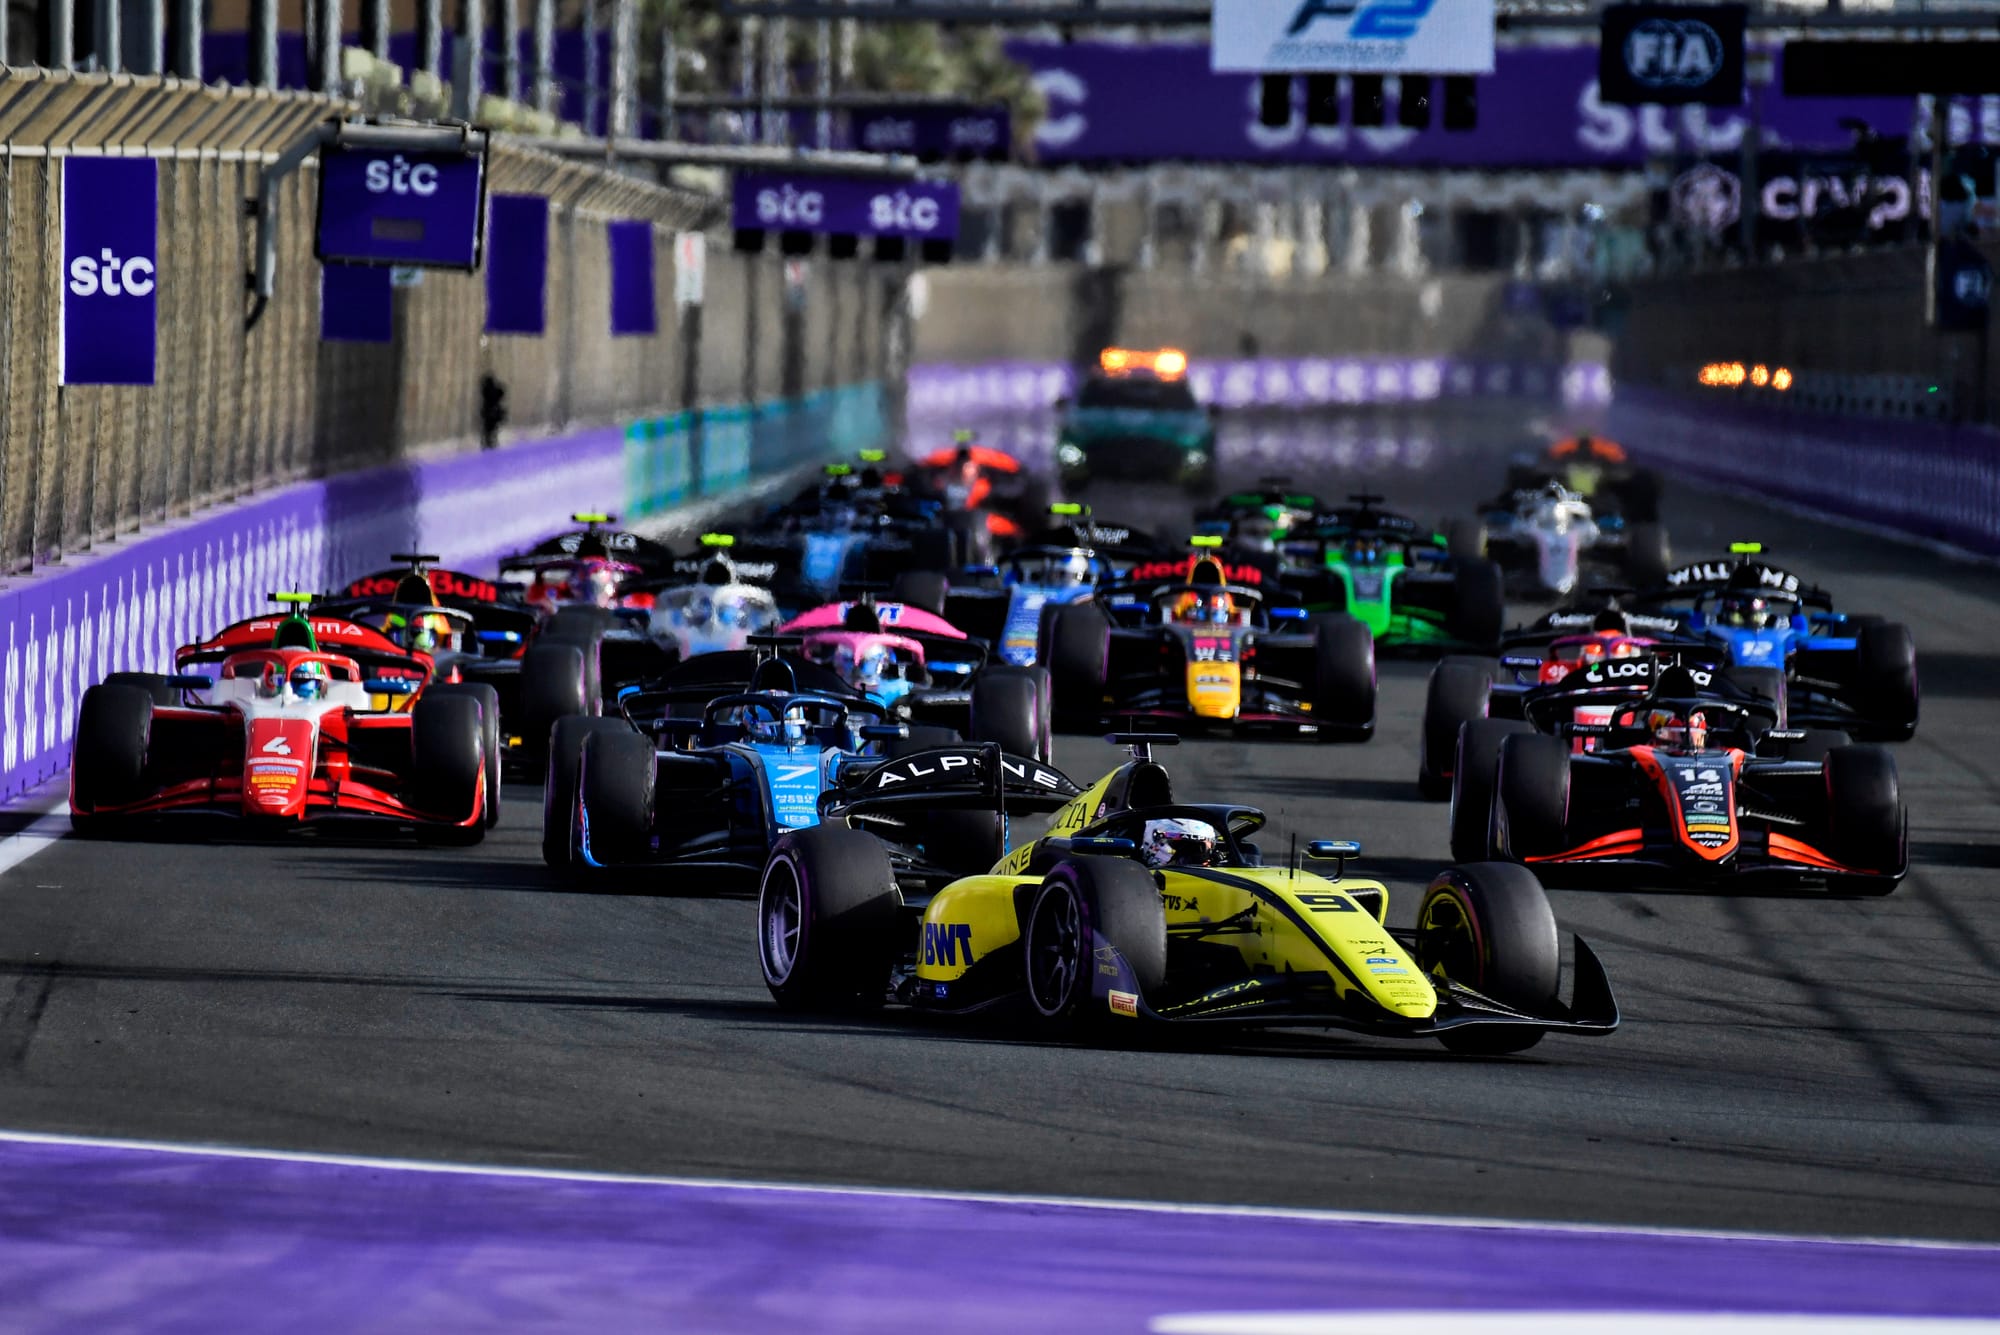 Kush Maini leads the Formula 2 field into Turn 1 in the Saudi Arabian Formula 2 sprint race